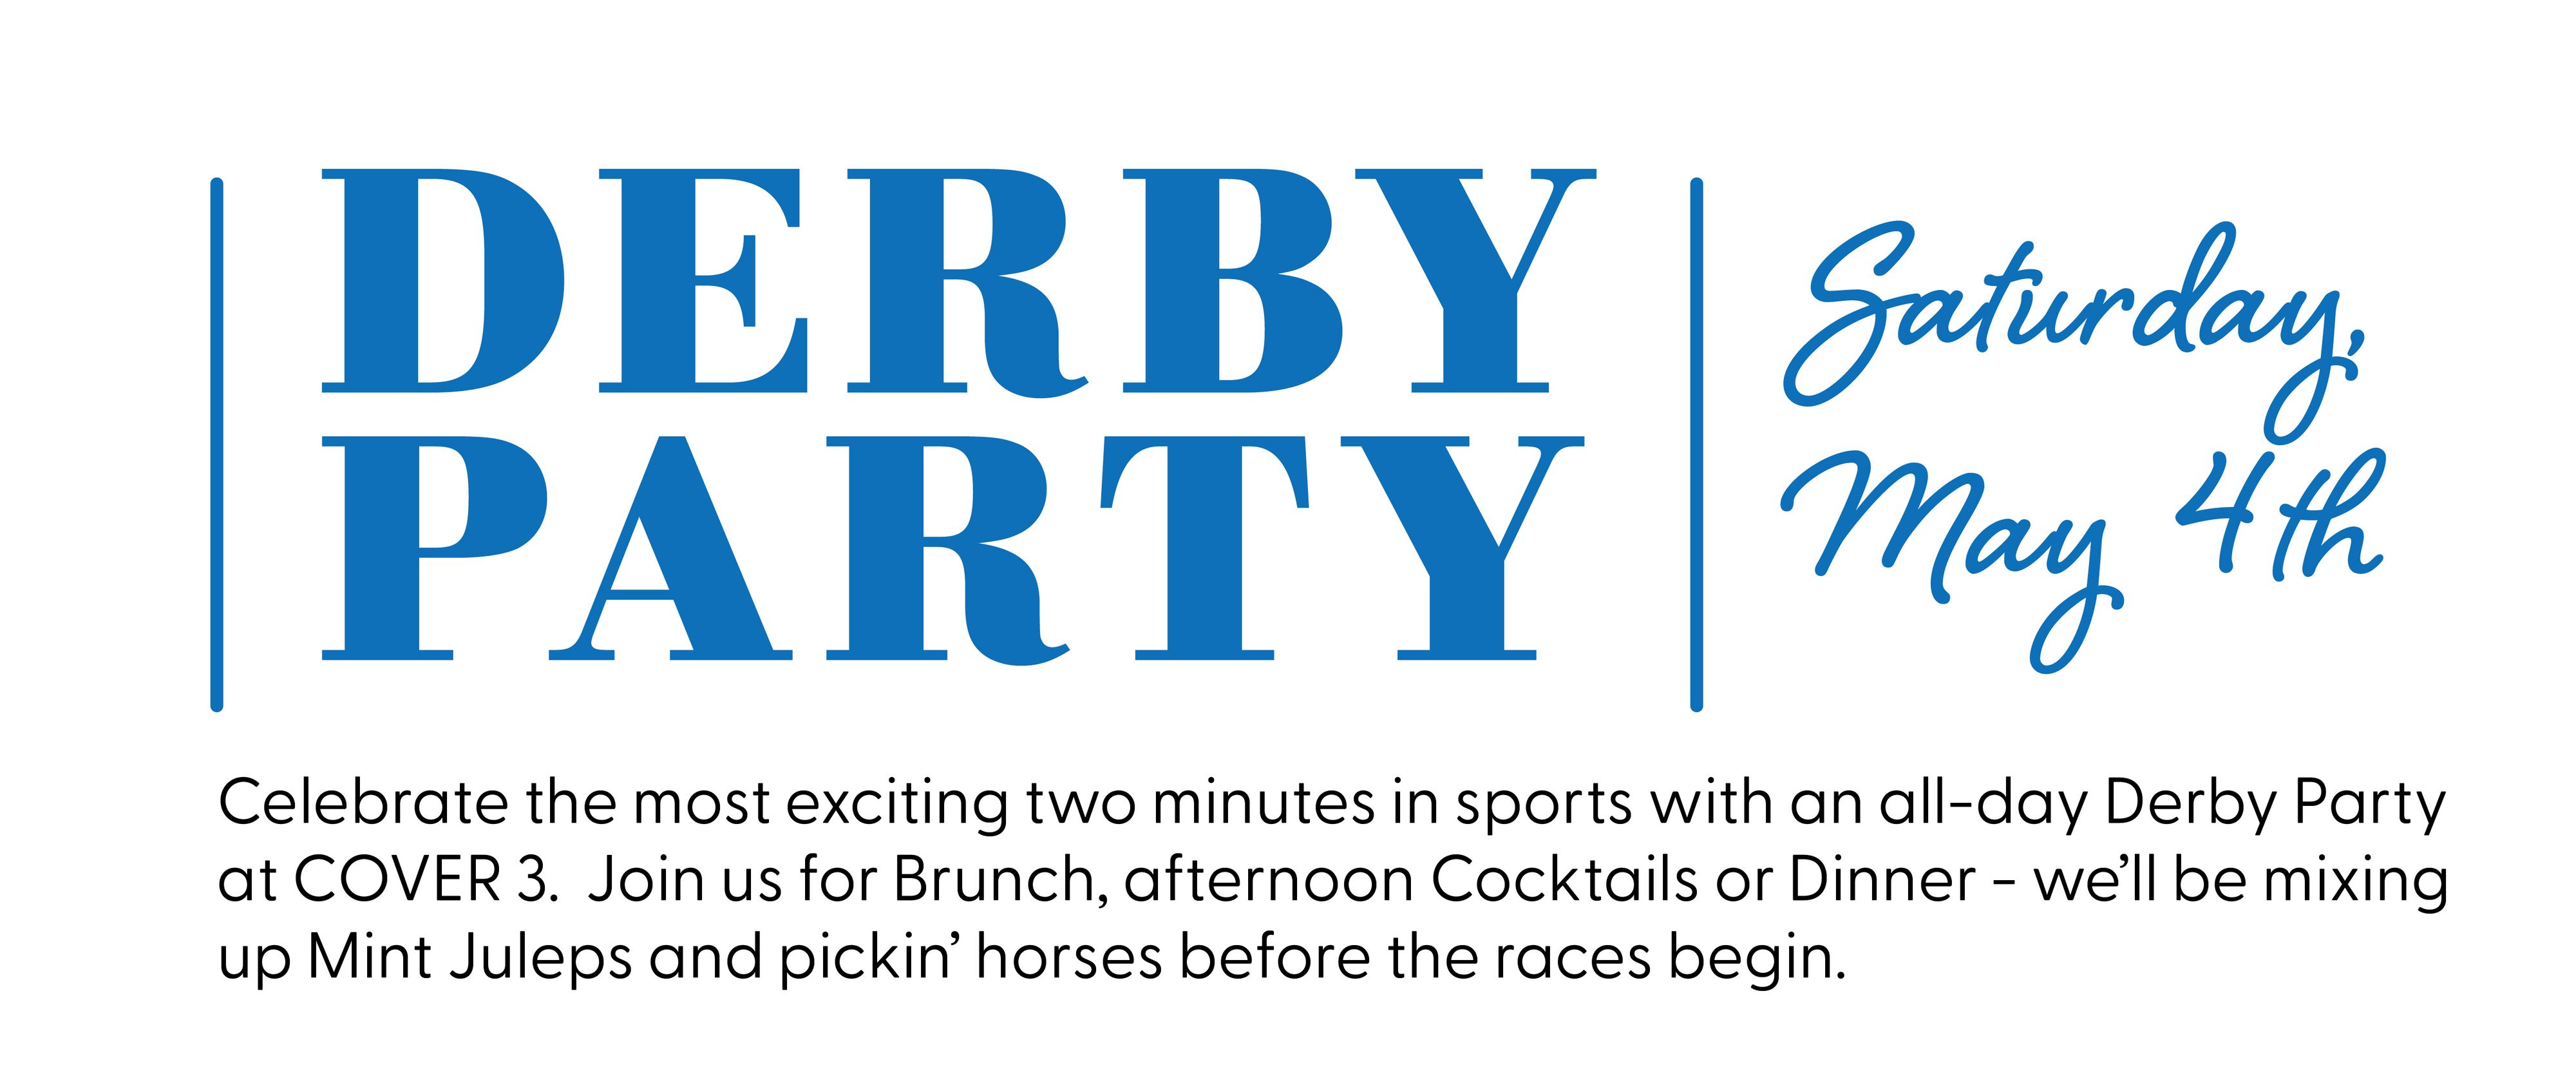 Website Sliders - Kentucky Derby-01.jpg